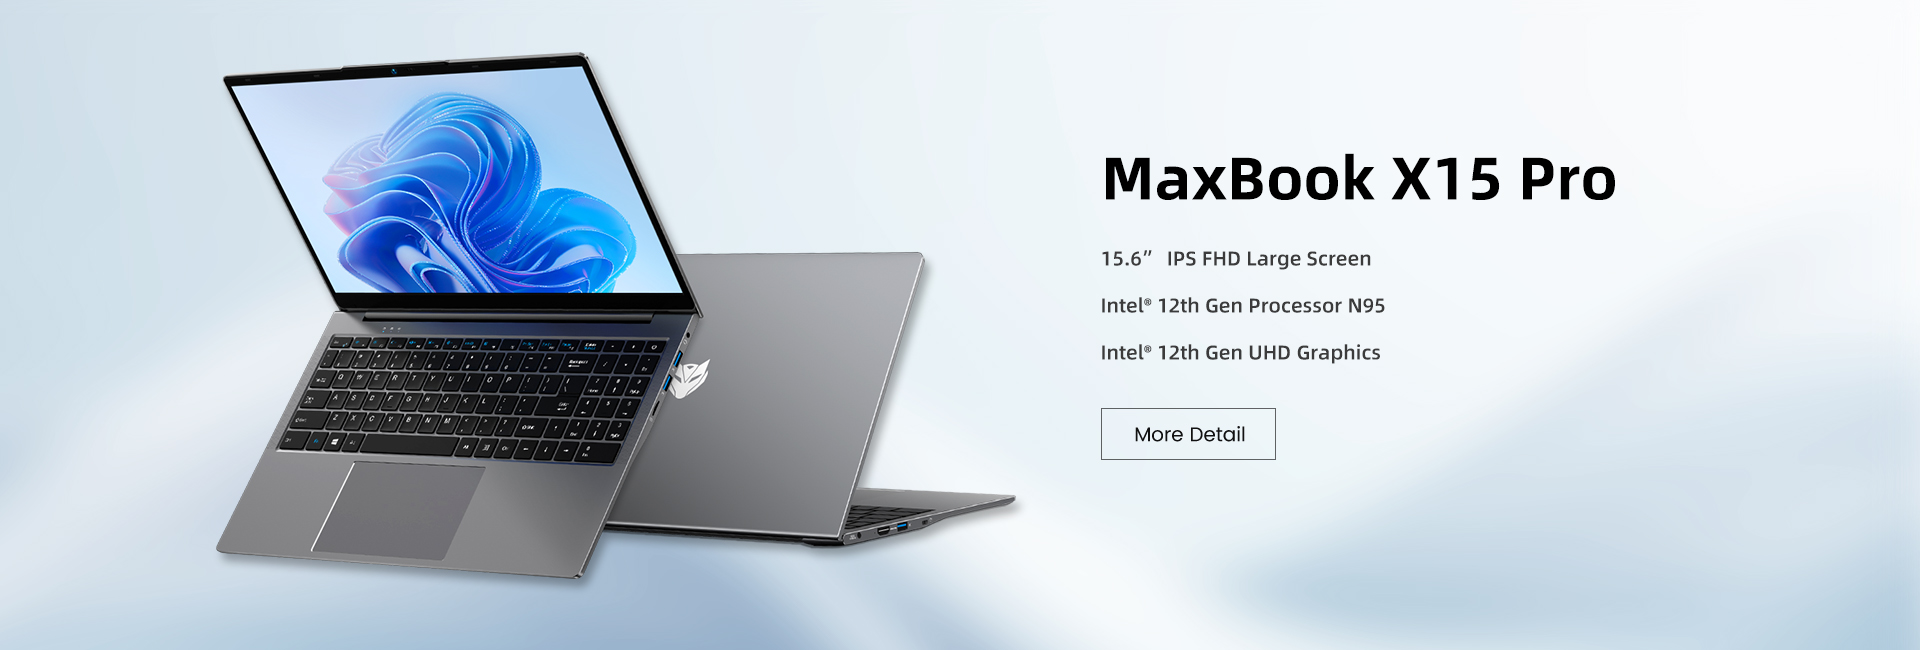 MaxBook X15 Pro